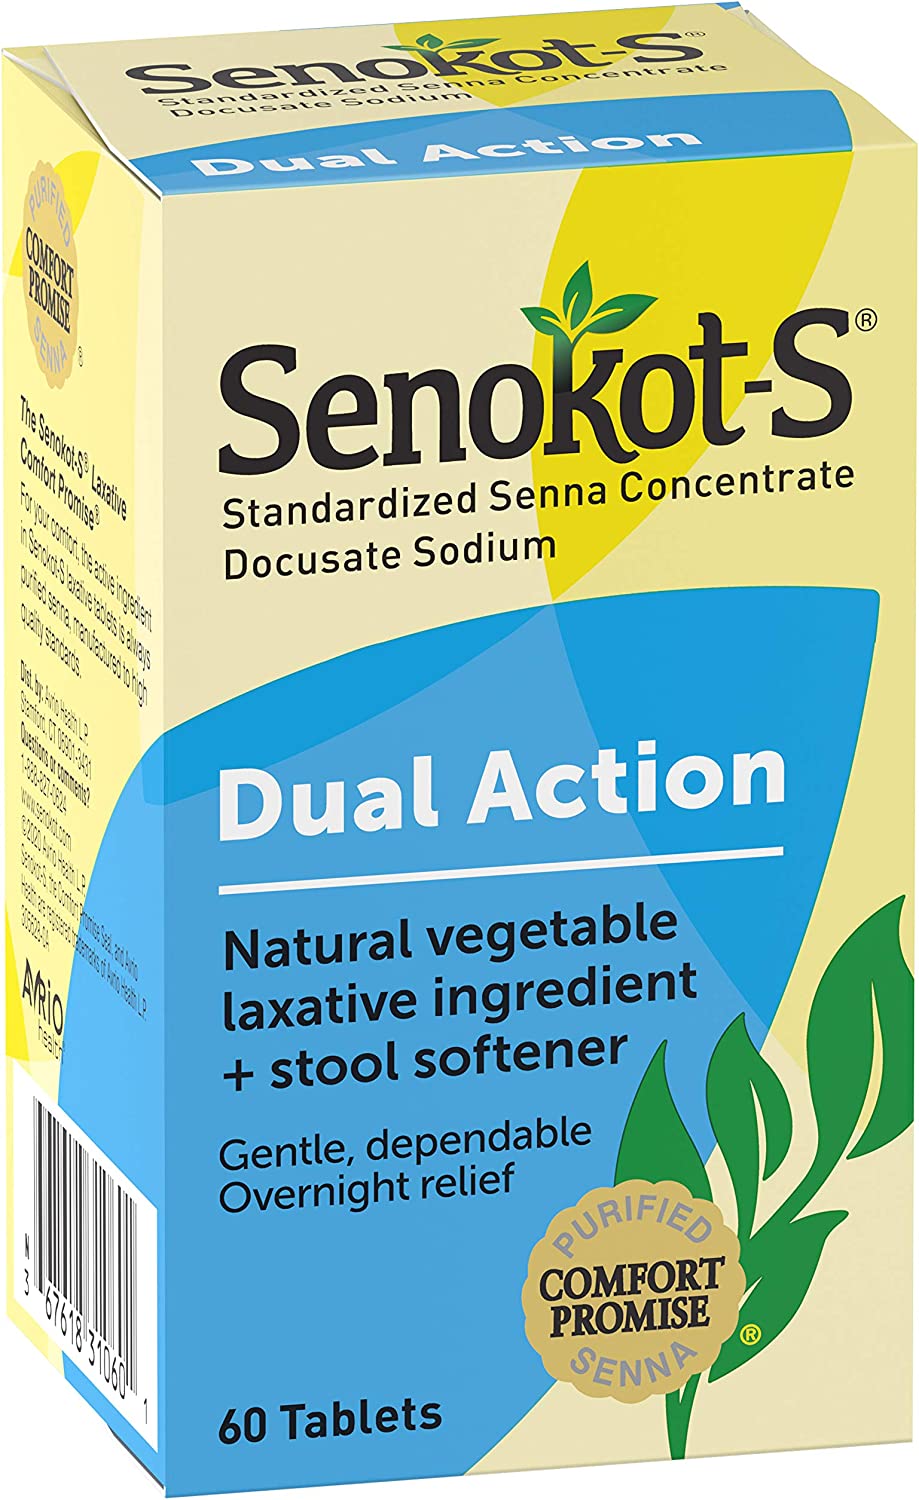 Senokot-S Gentle Dependable Dual Action Stool Softener